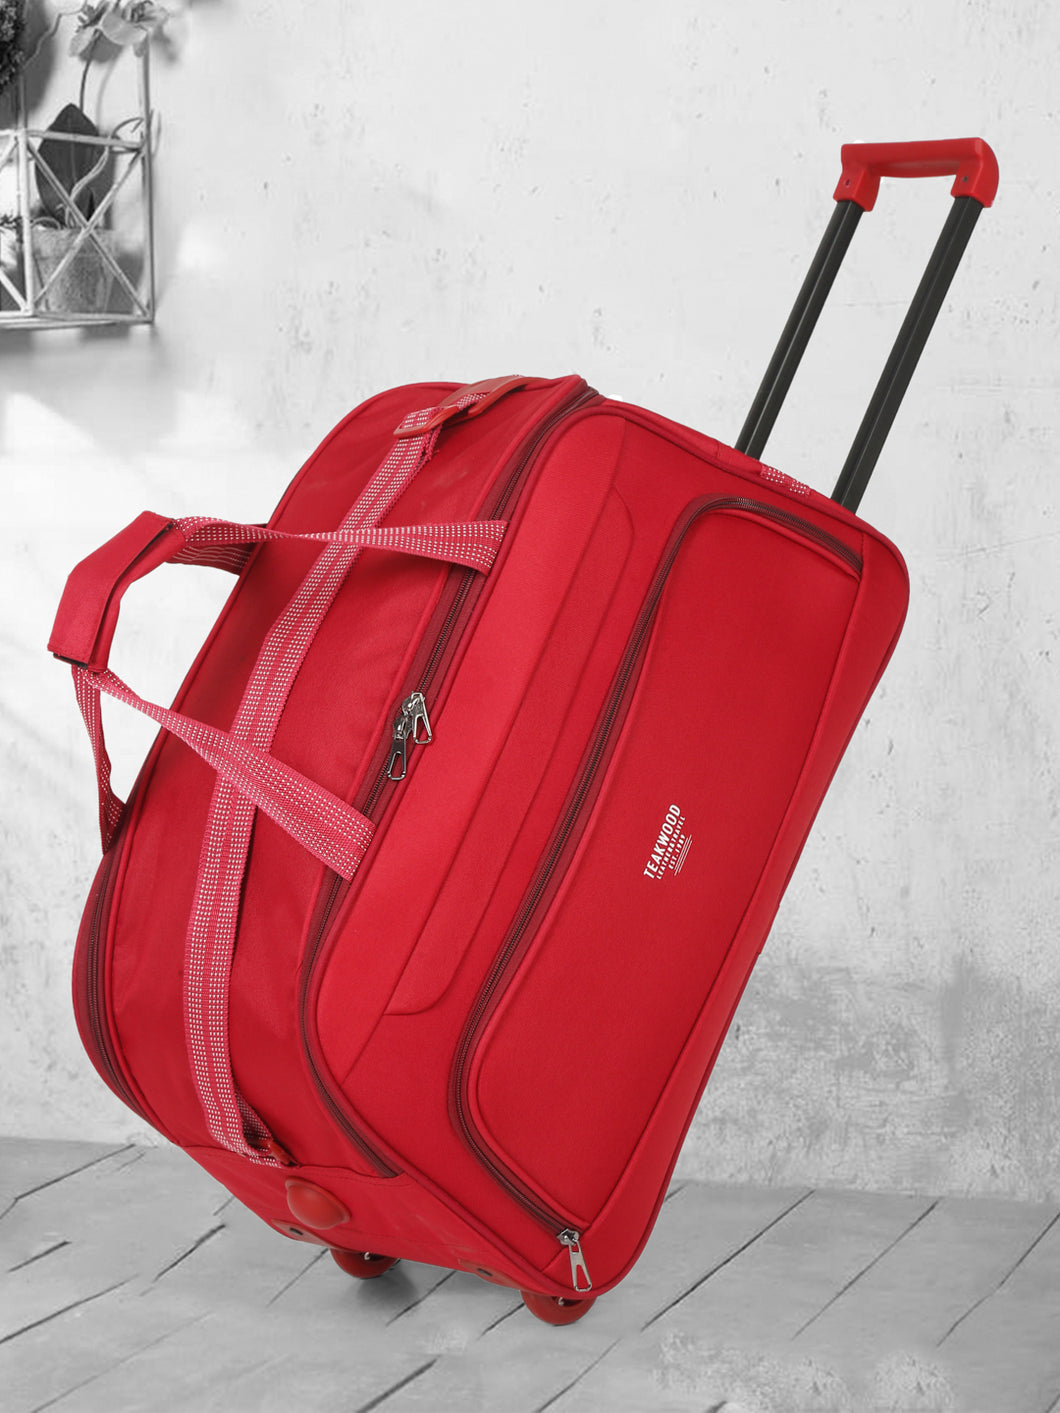 Hand Luggage Bags Wheels | Carryon Luggage Wheels | Travel Luggage Wheels -  Suitcase - Aliexpress